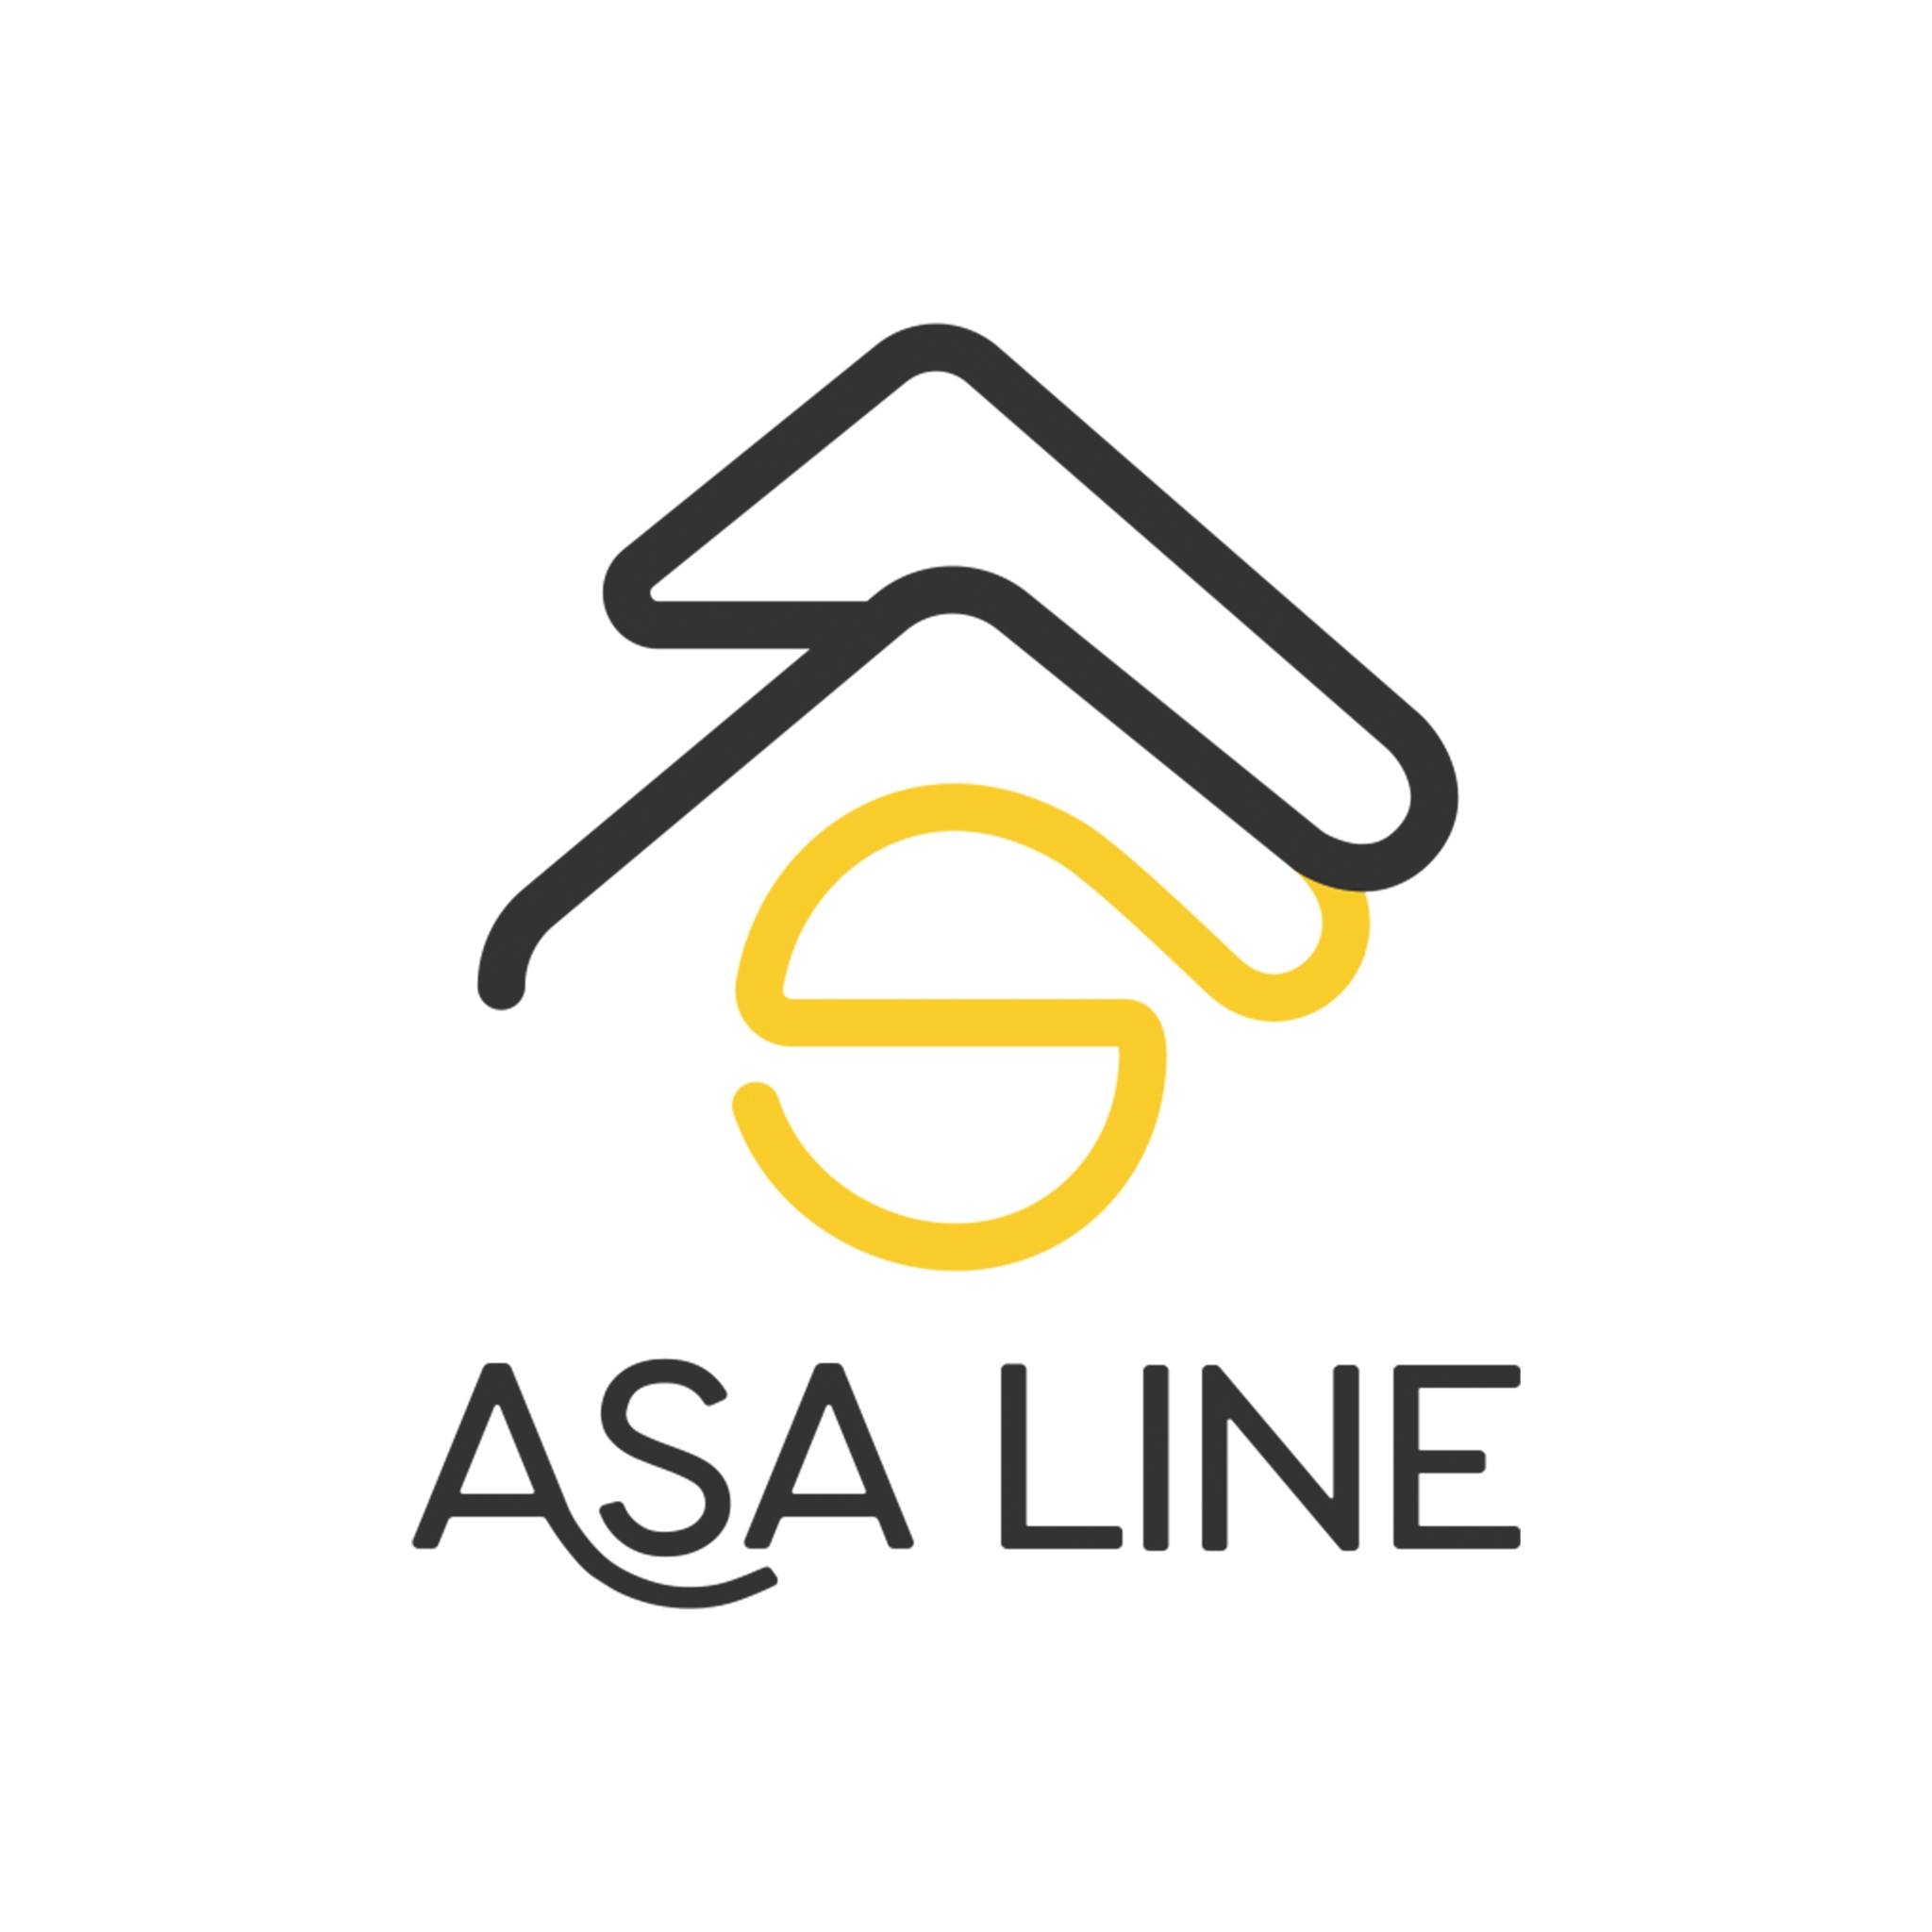 مصنع اسا لاين Asa line